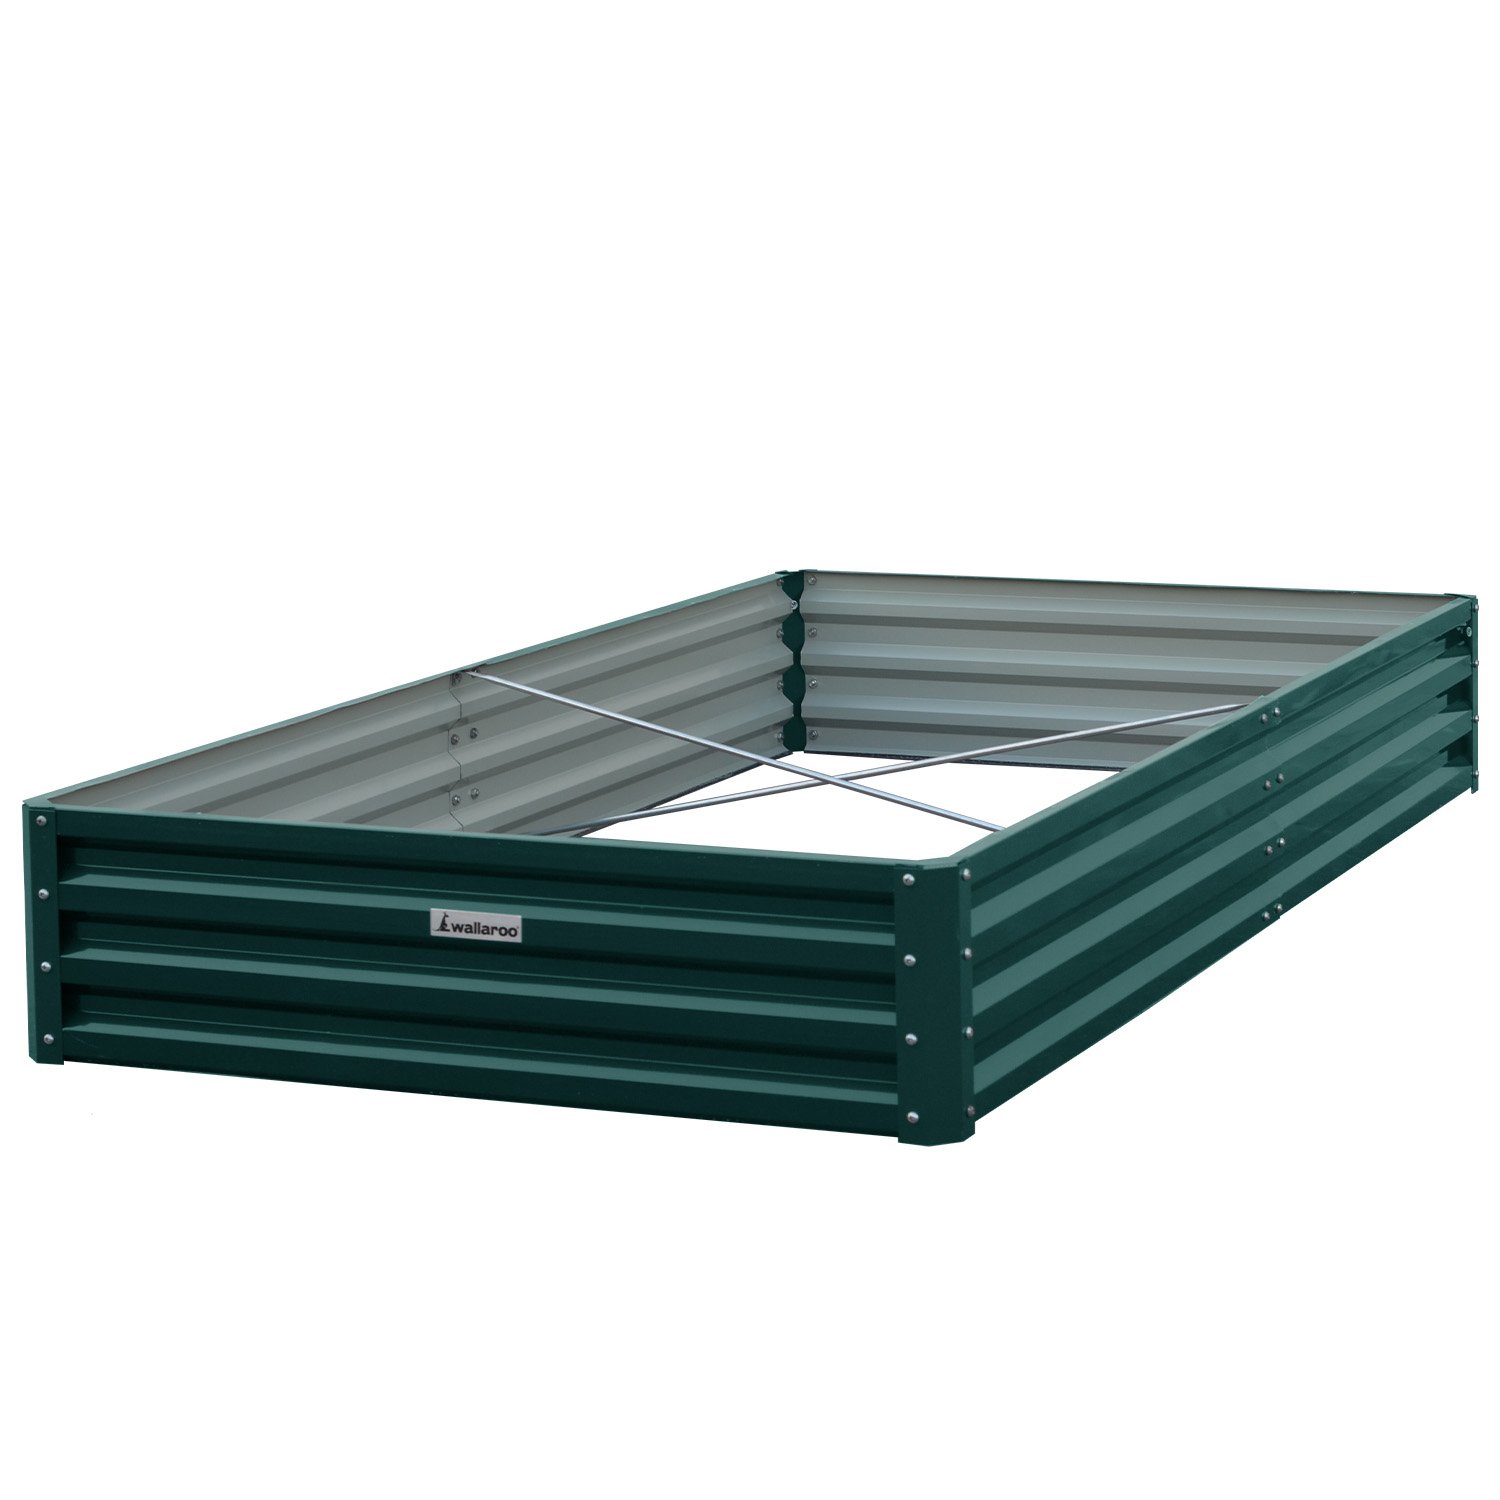 Wallaroo Garden Bed 240 x 120 x 30cm Galvanized Steel - Green 2